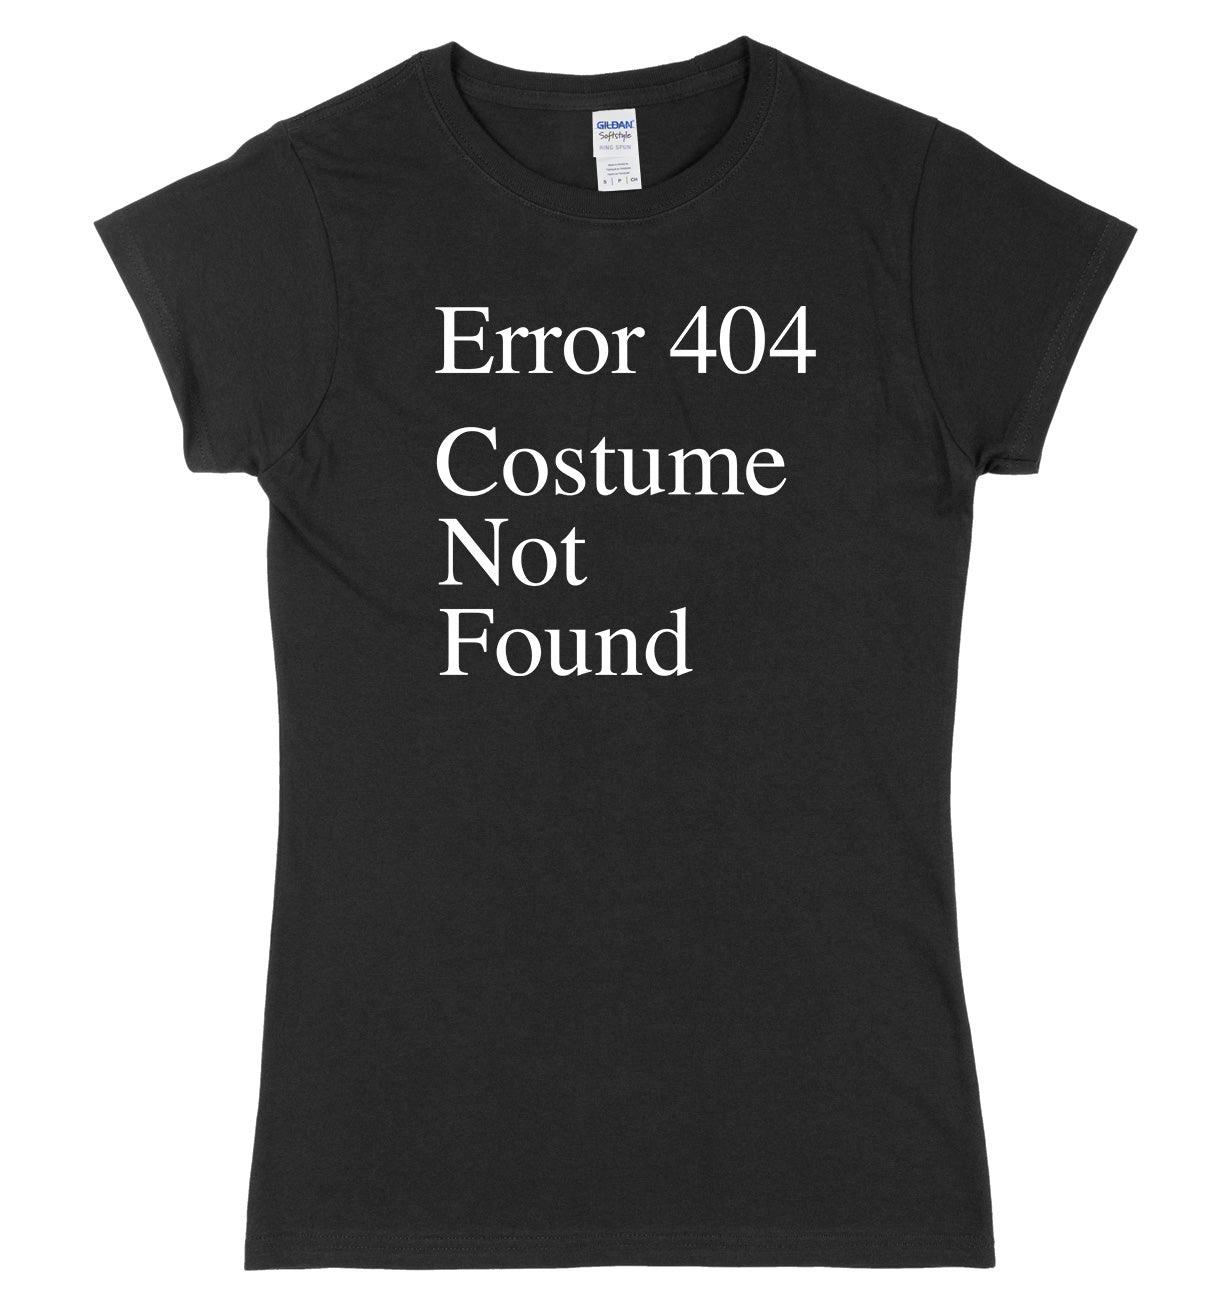 Error 404 Costume Not Found Womens Ladies Slim Fit Halloween T-Shirt